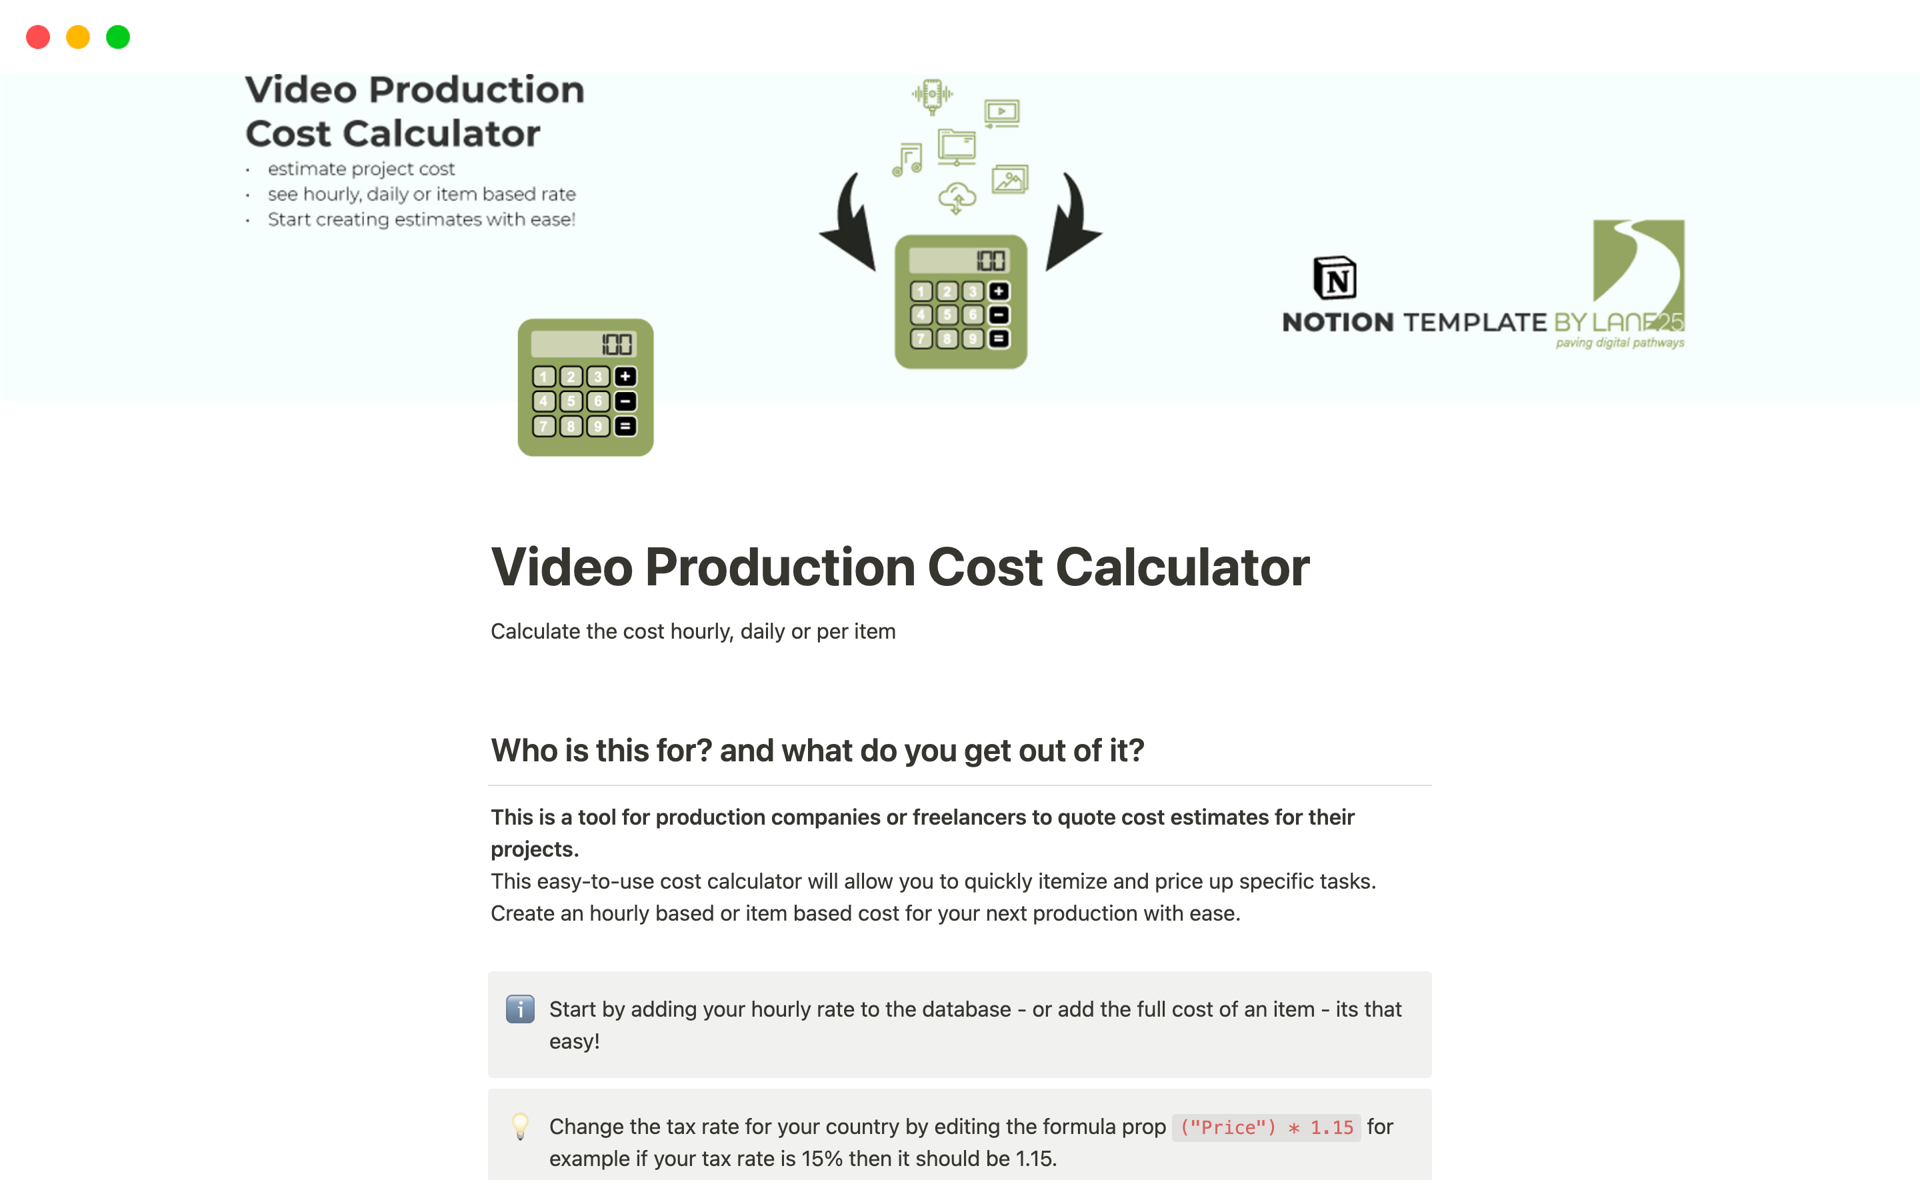 Vista previa de una plantilla para Video Production Cost Calculator